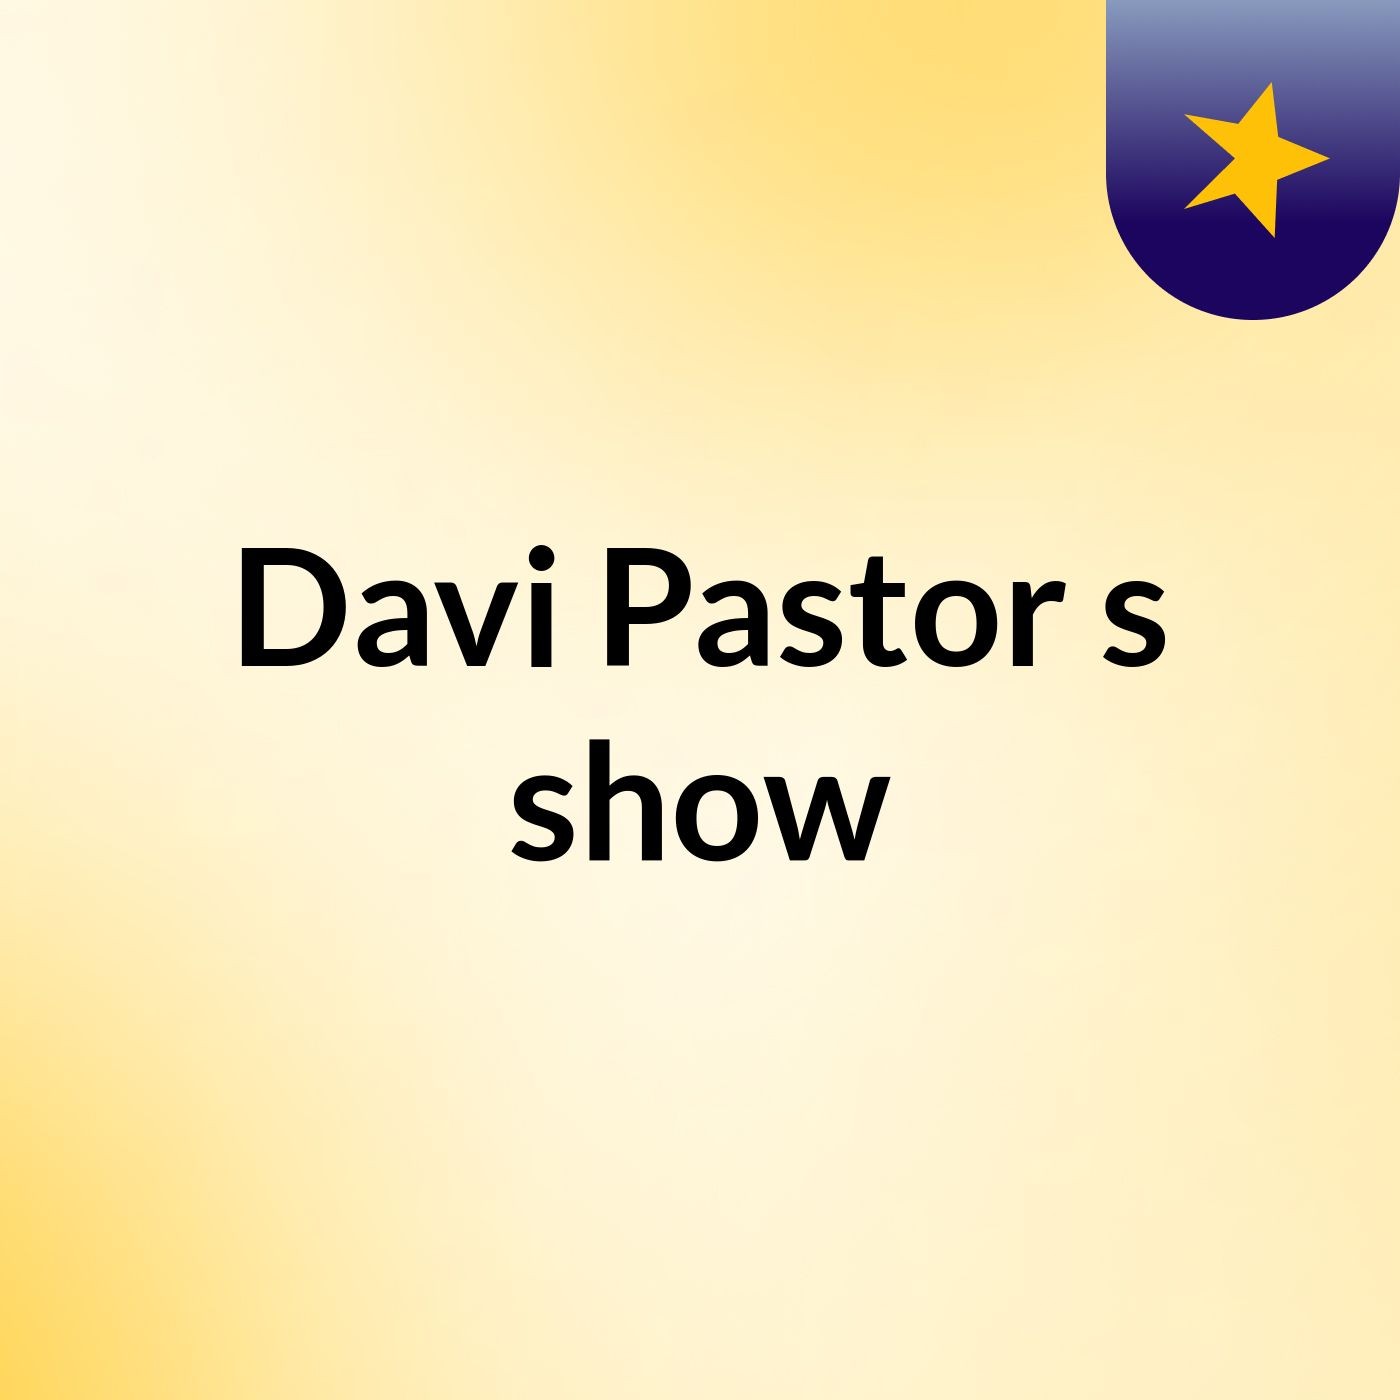 Davi Pastor's show